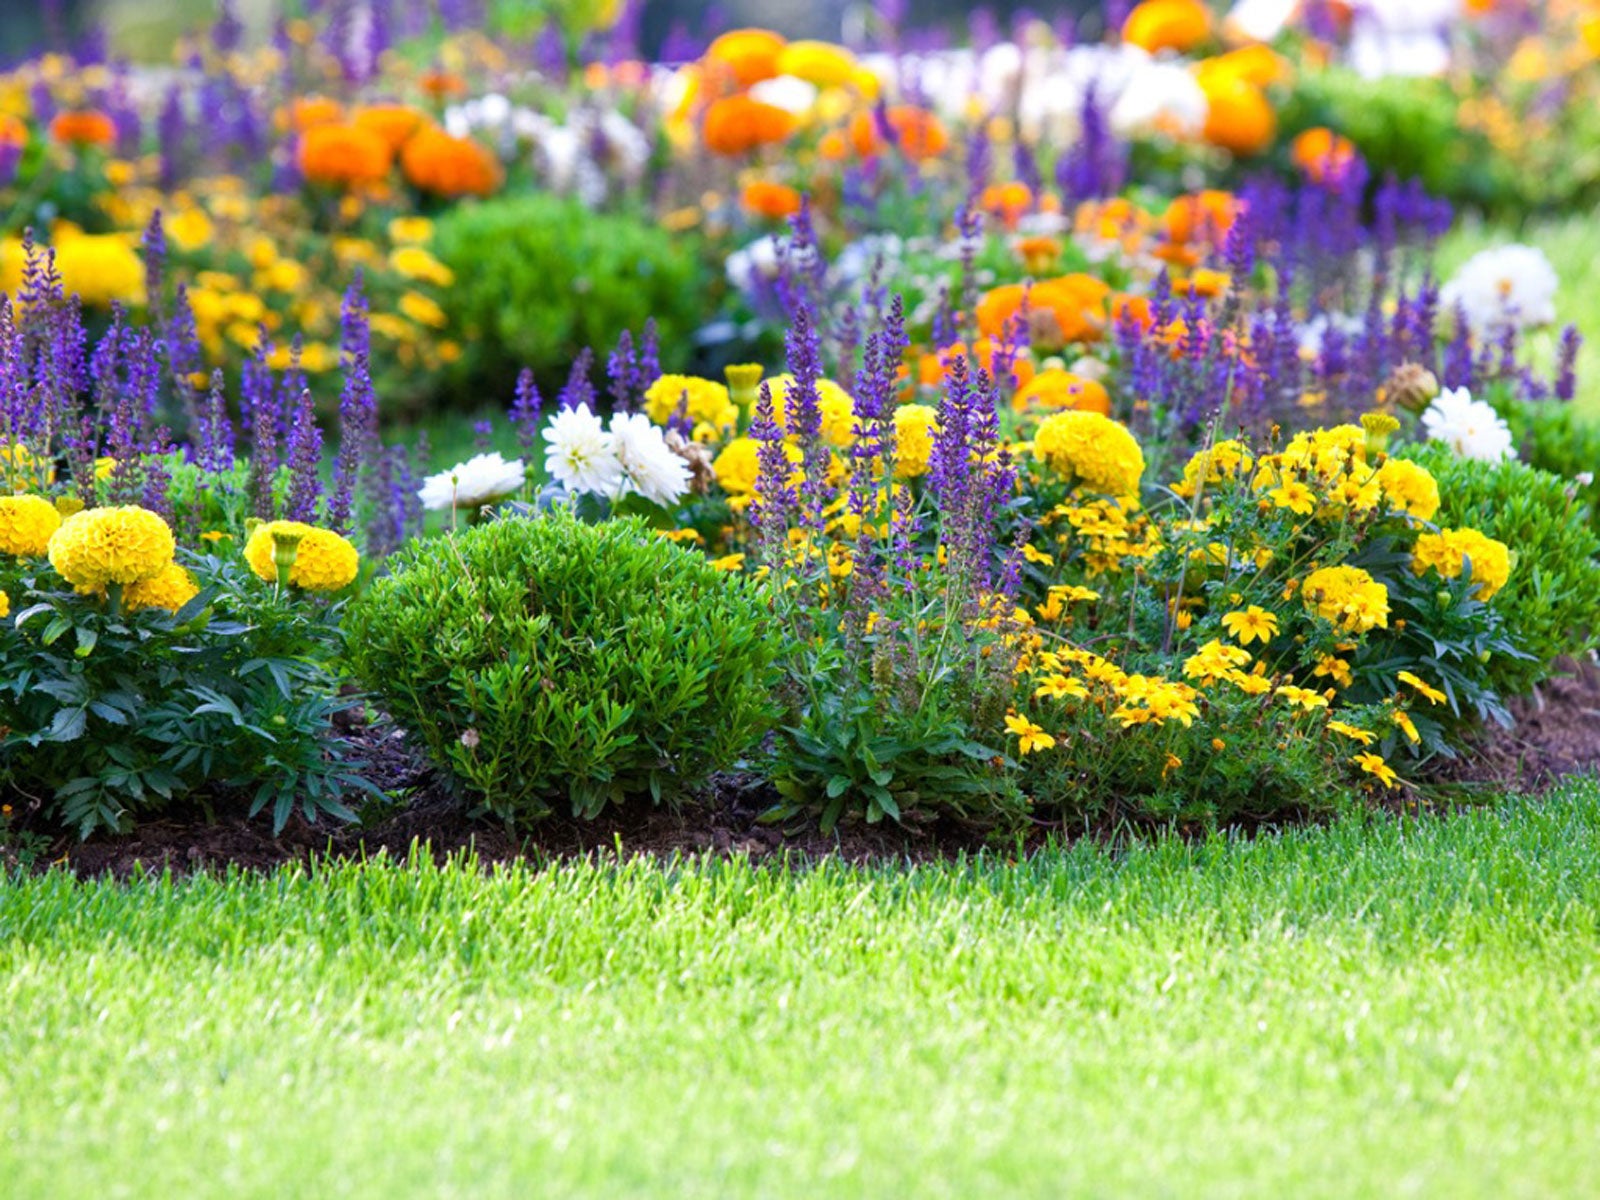 Expert Tips for Creating a Beautiful Flower Garden from Scratch